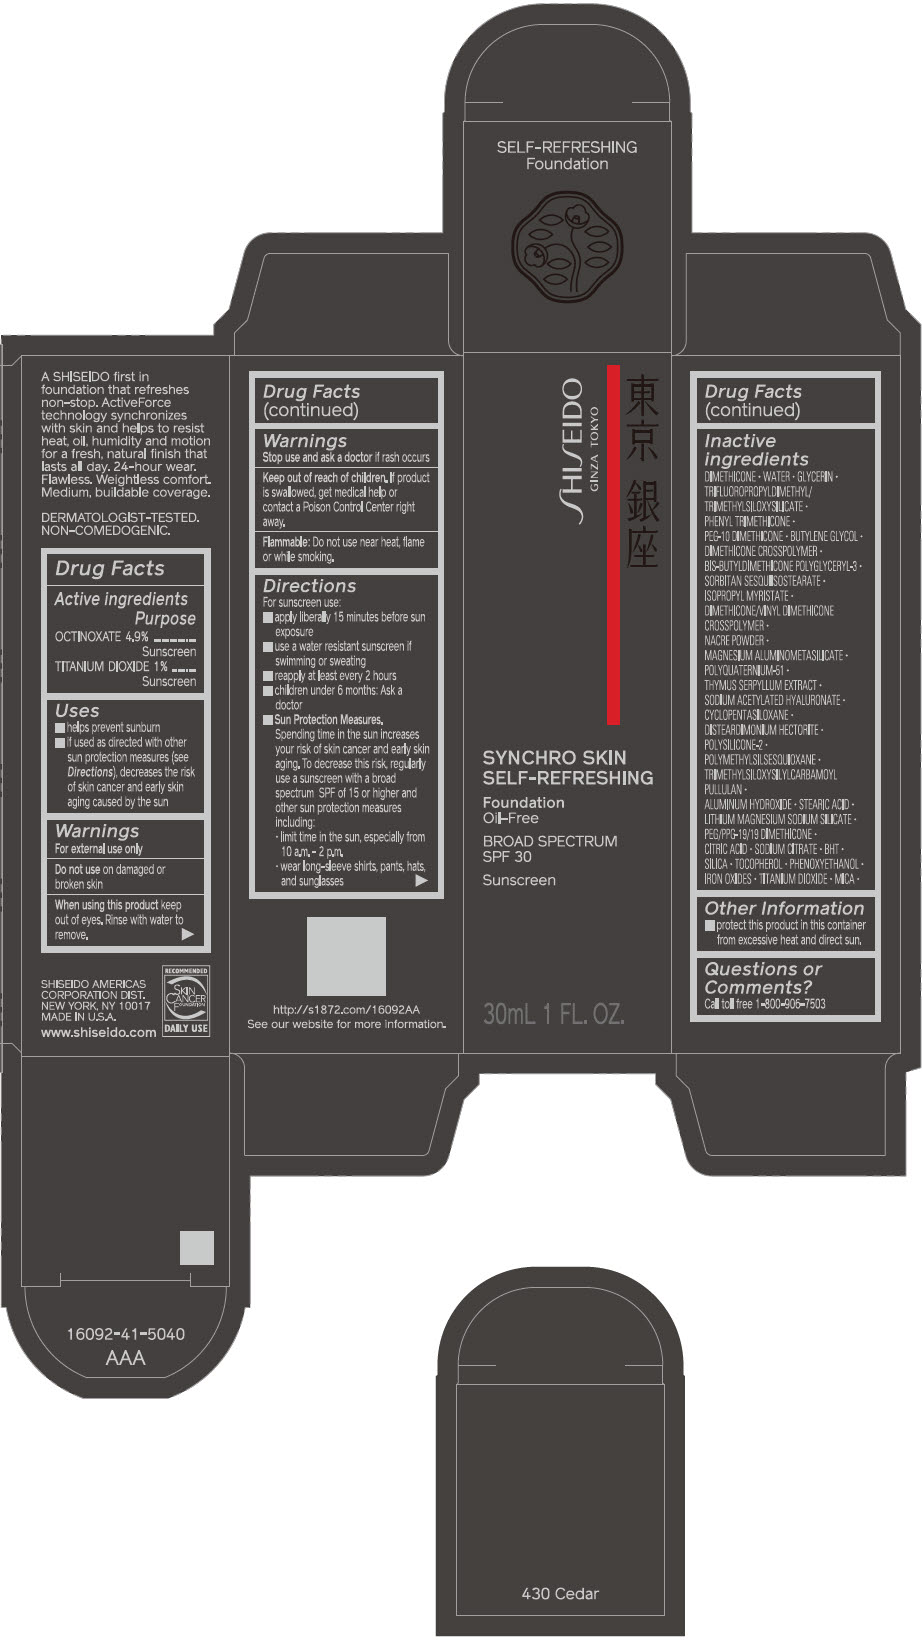 PRINCIPAL DISPLAY PANEL - 30 mL Bottle Carton - 430 Cedar